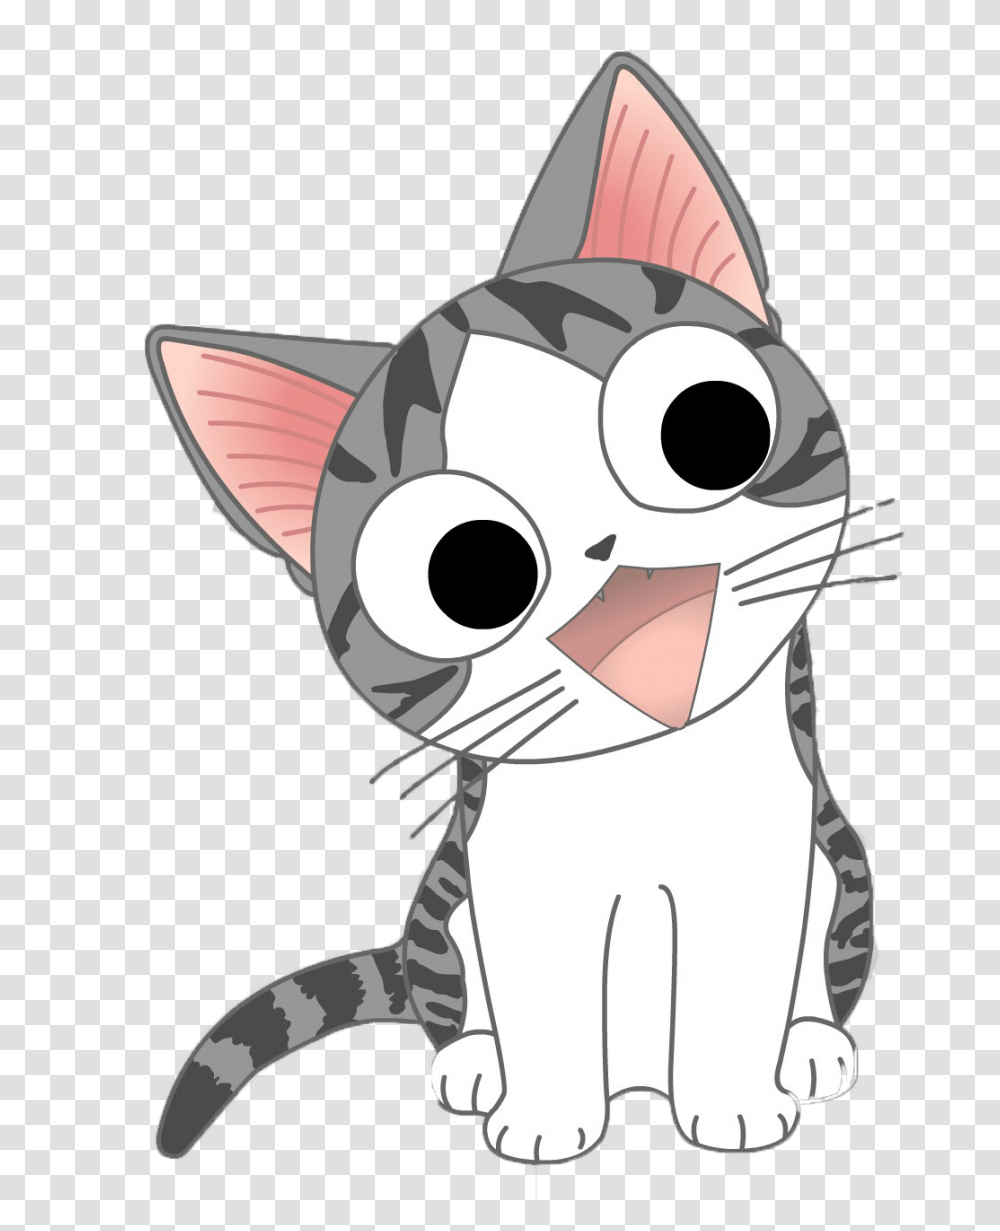 Download Hd Anime Cat Manga Cute Cute Anime Cat Transparent Png